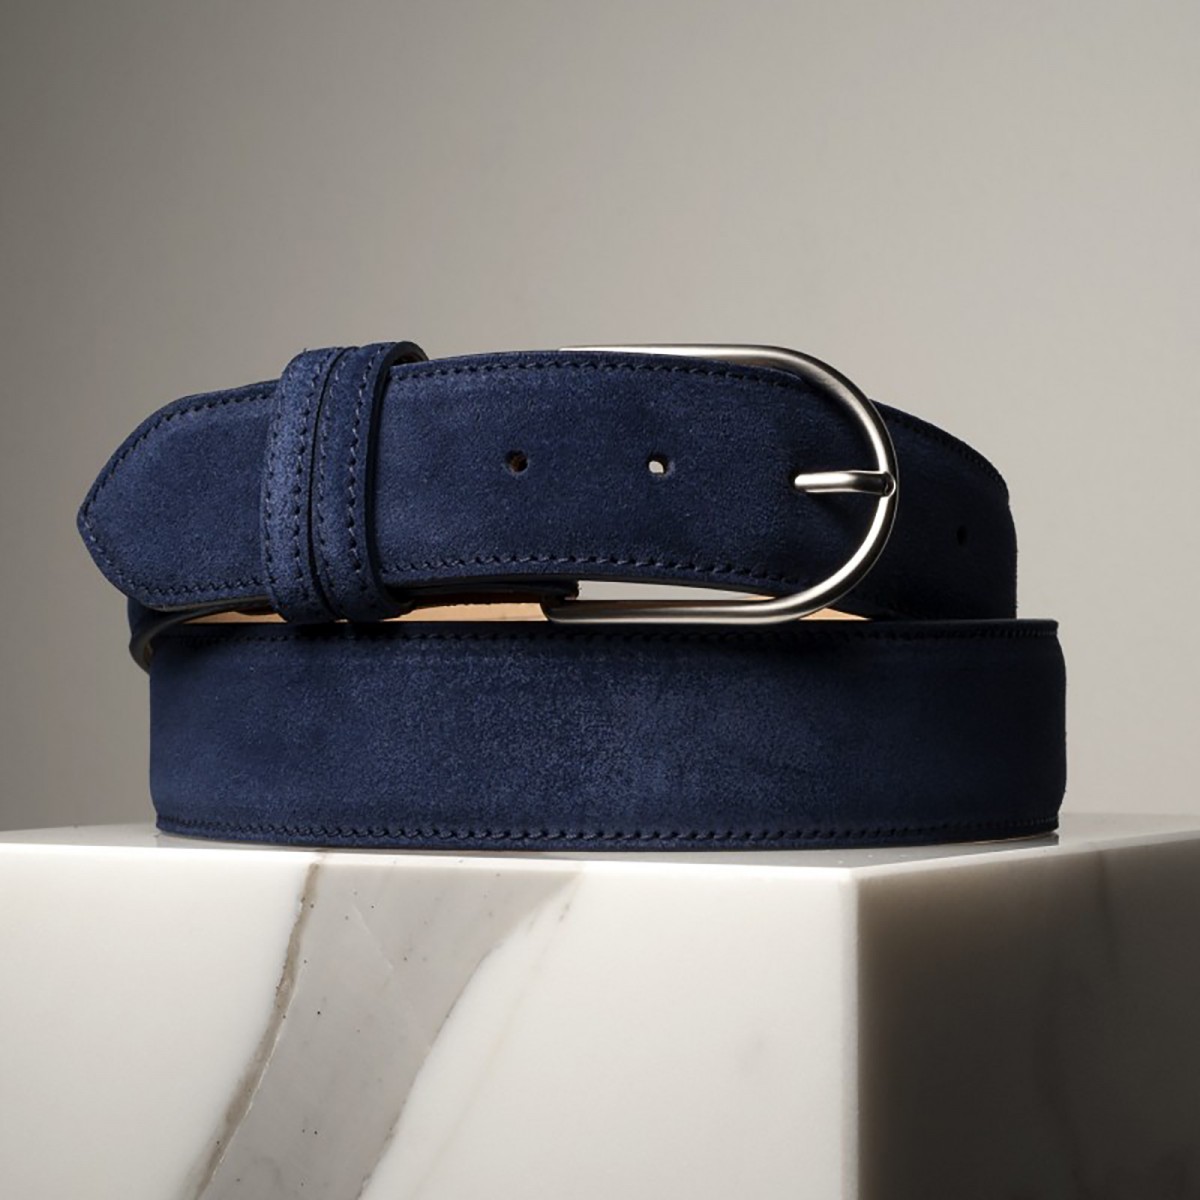 NUBUCK CALFSKIN - Leather belt, handmade in Italy